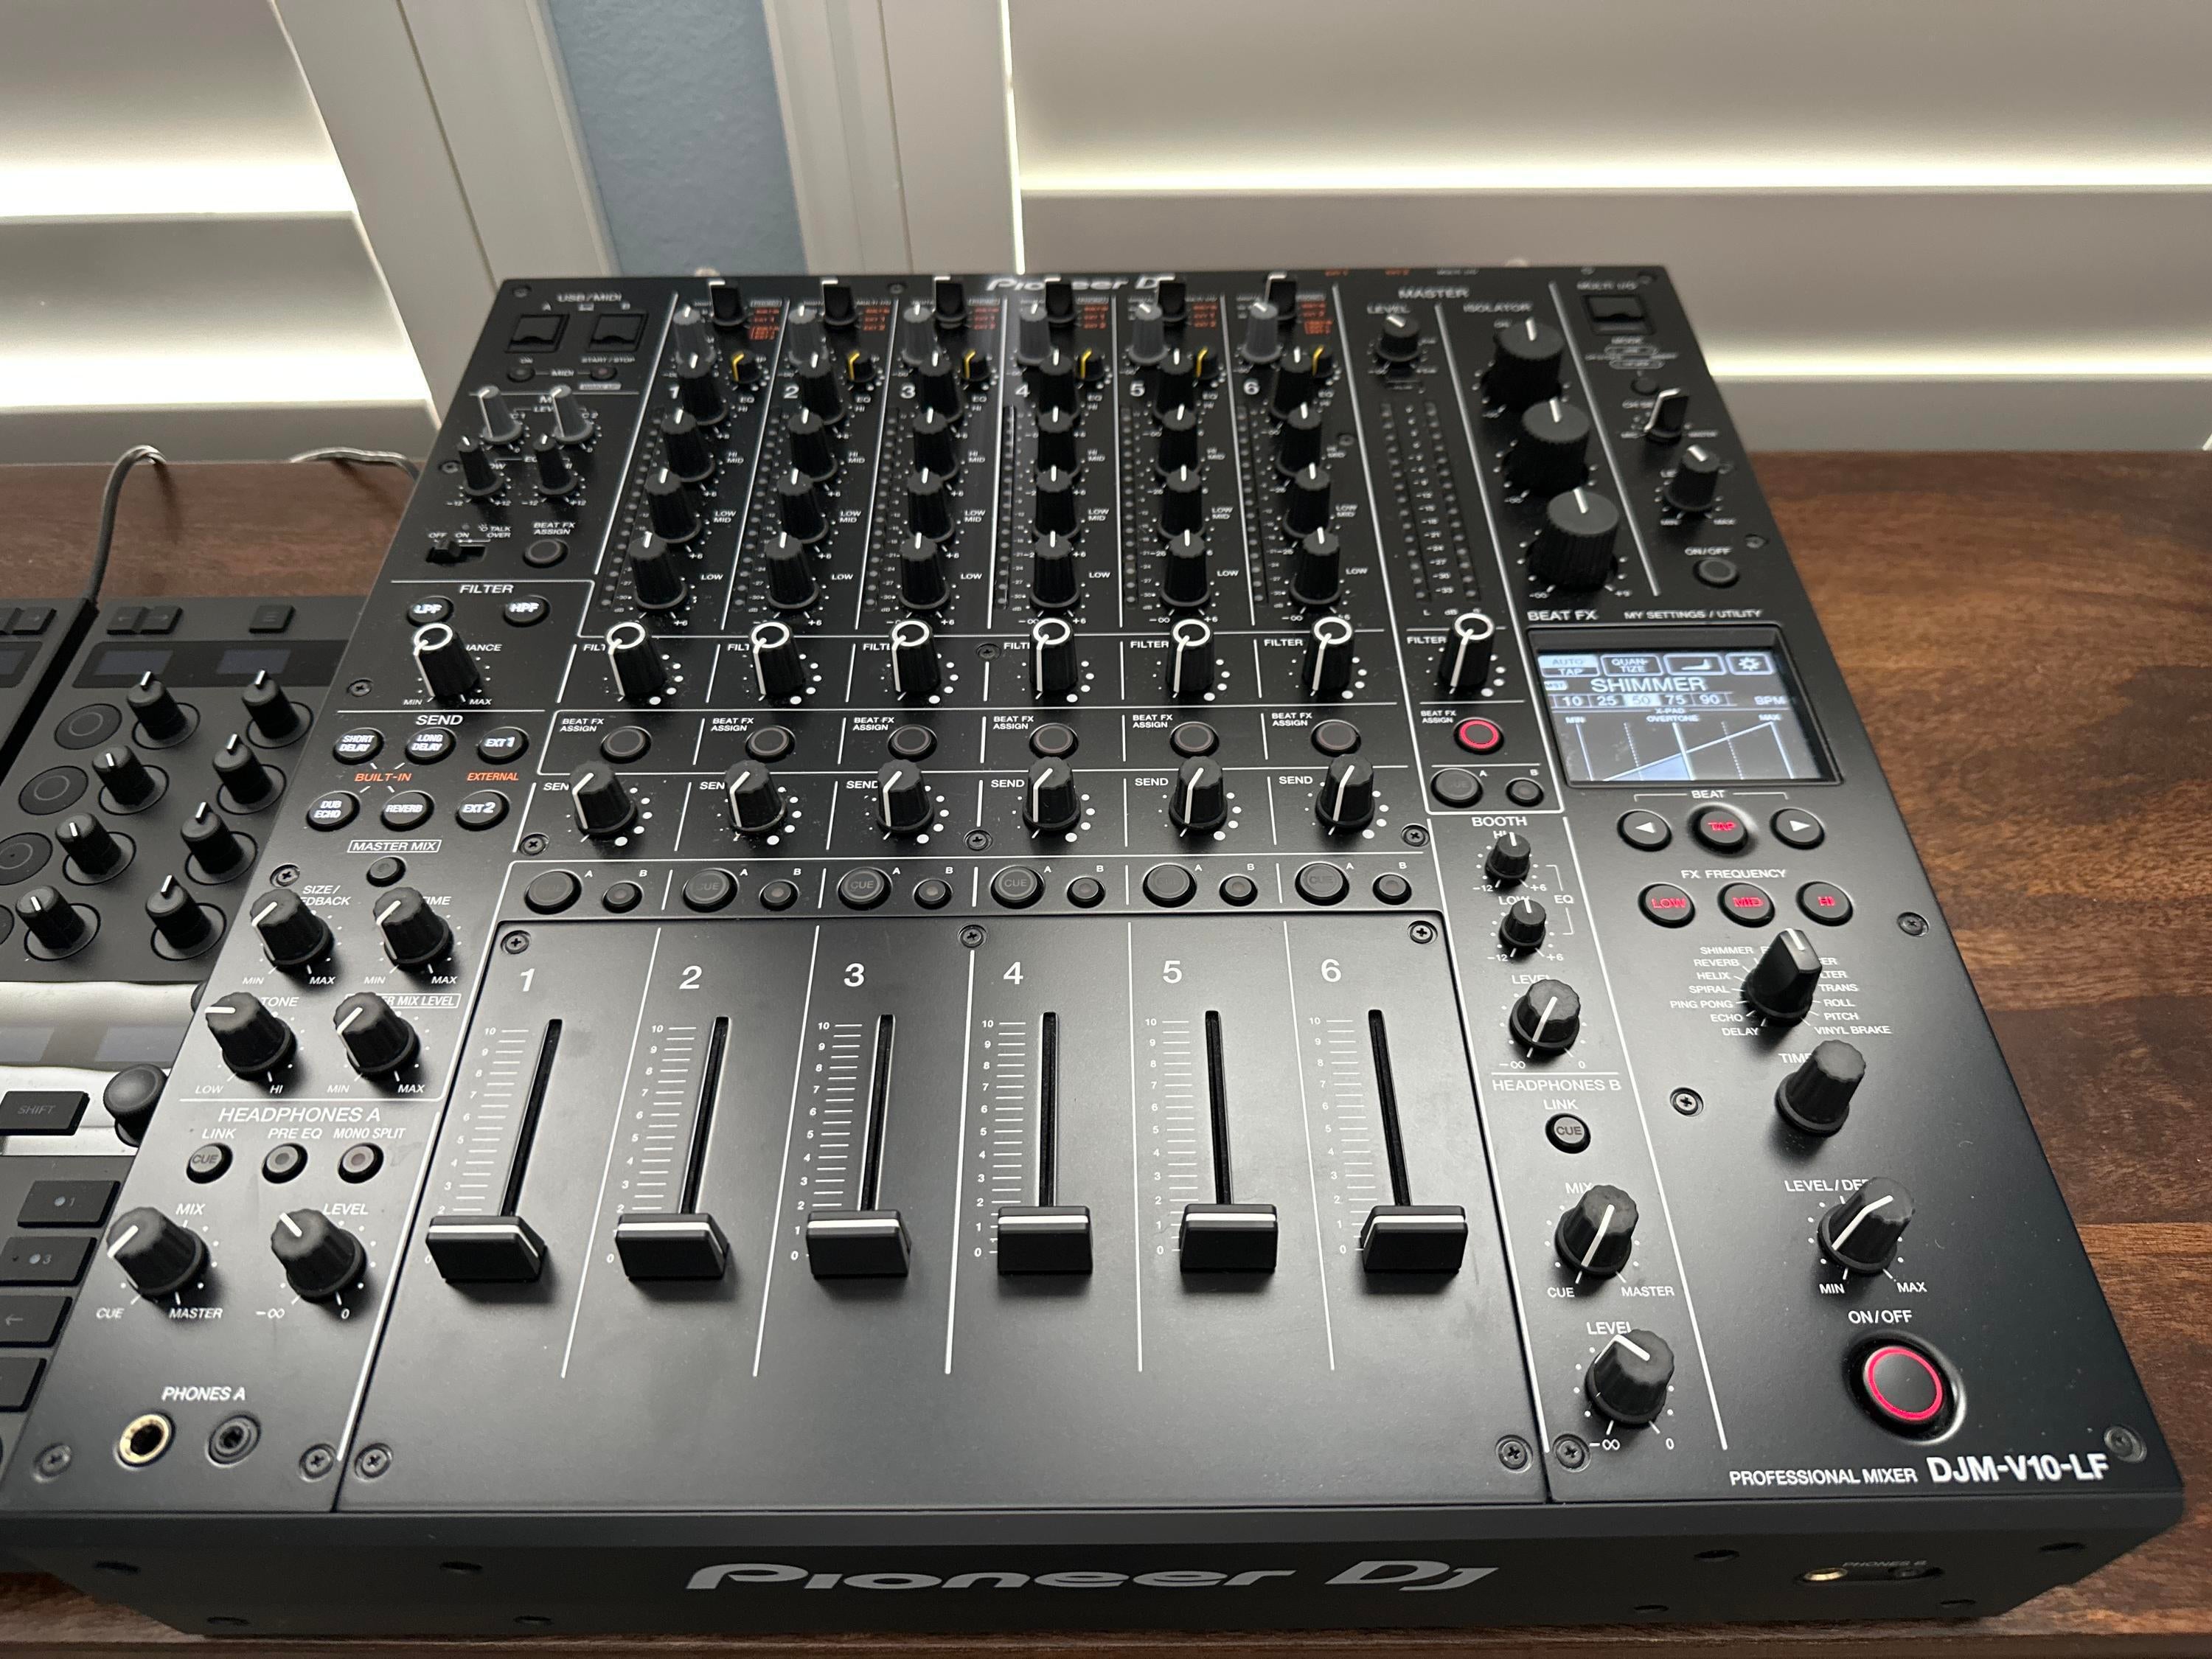 Used Pioneer Pro DJ Mixer DJM-600 - Sweetwater's Gear Exchange